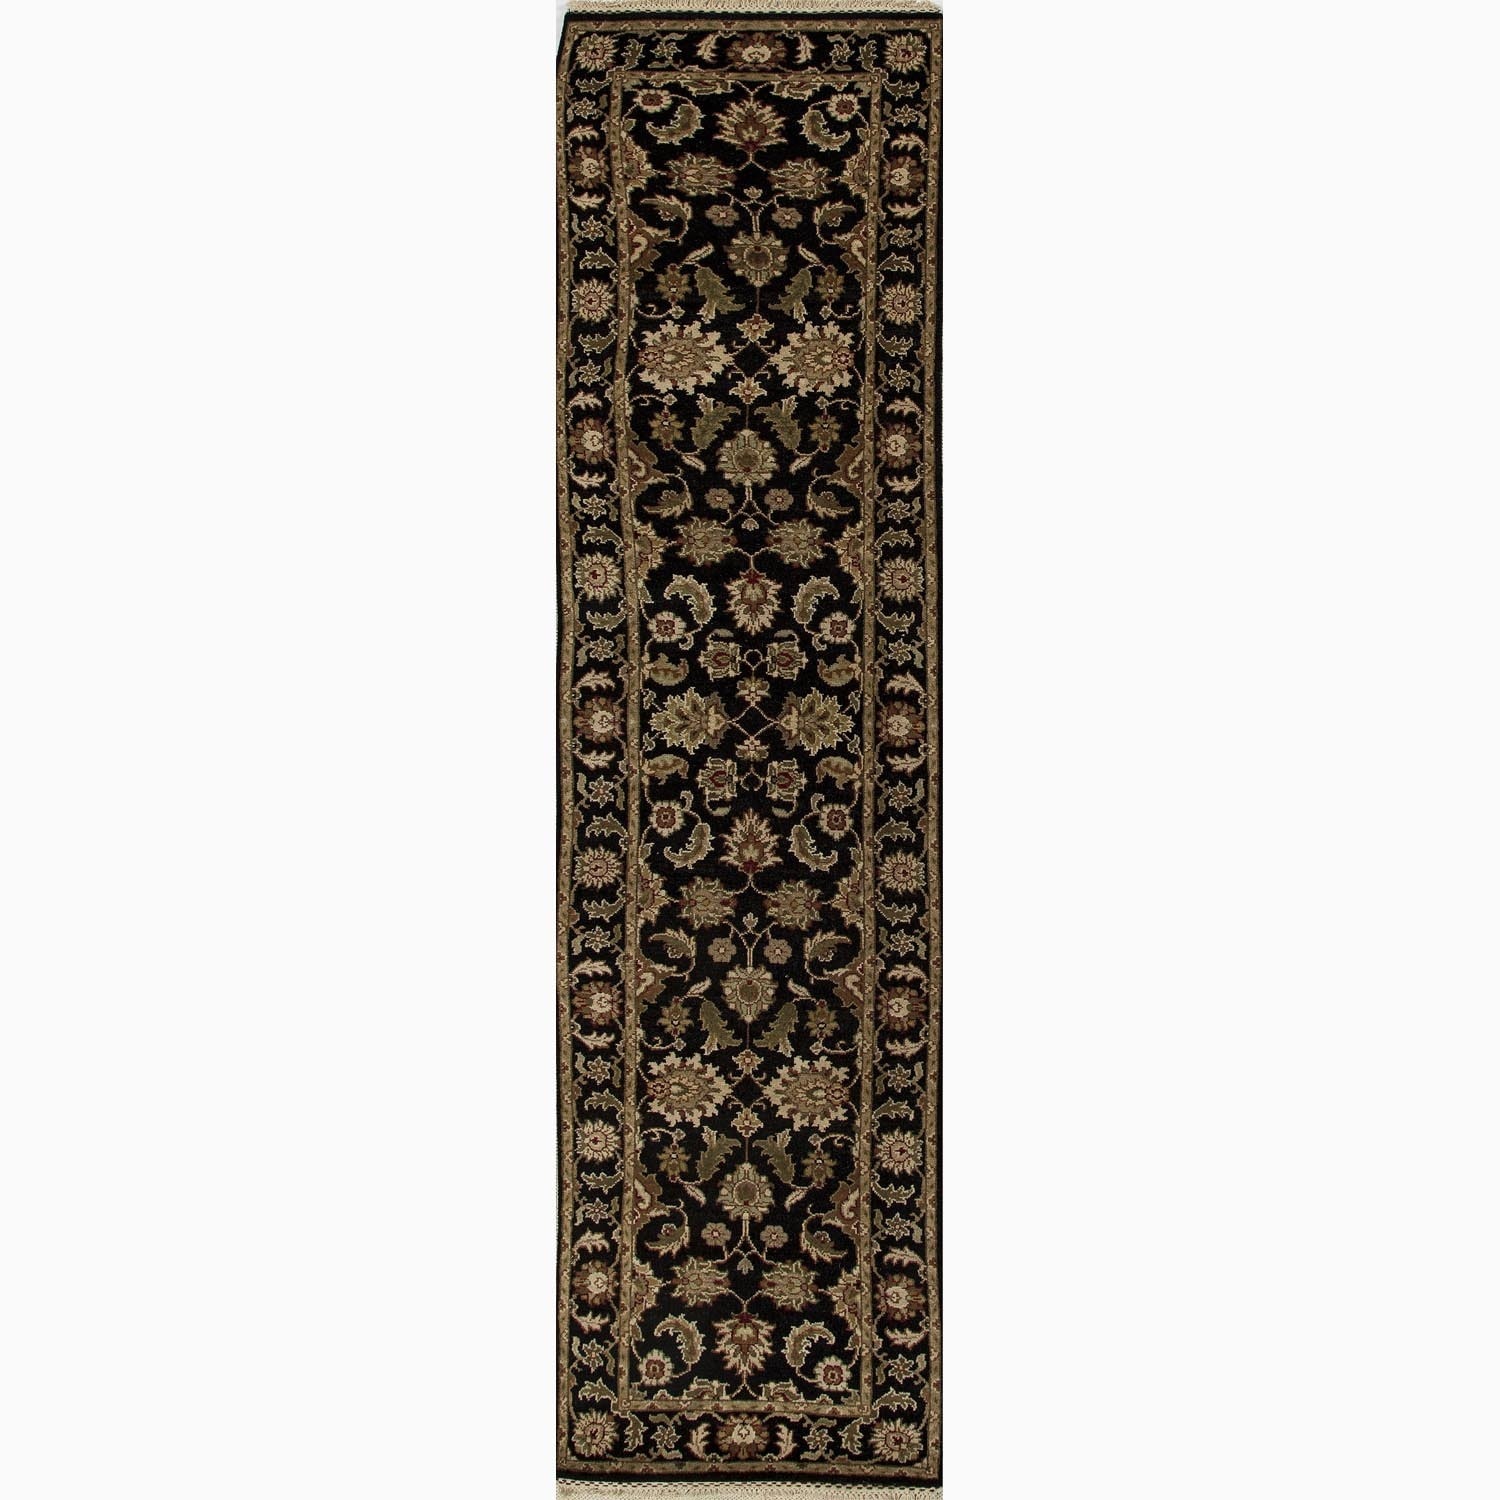 Hand made Oriental Pattern Black/ Tan Wool Rug (2.6x12)